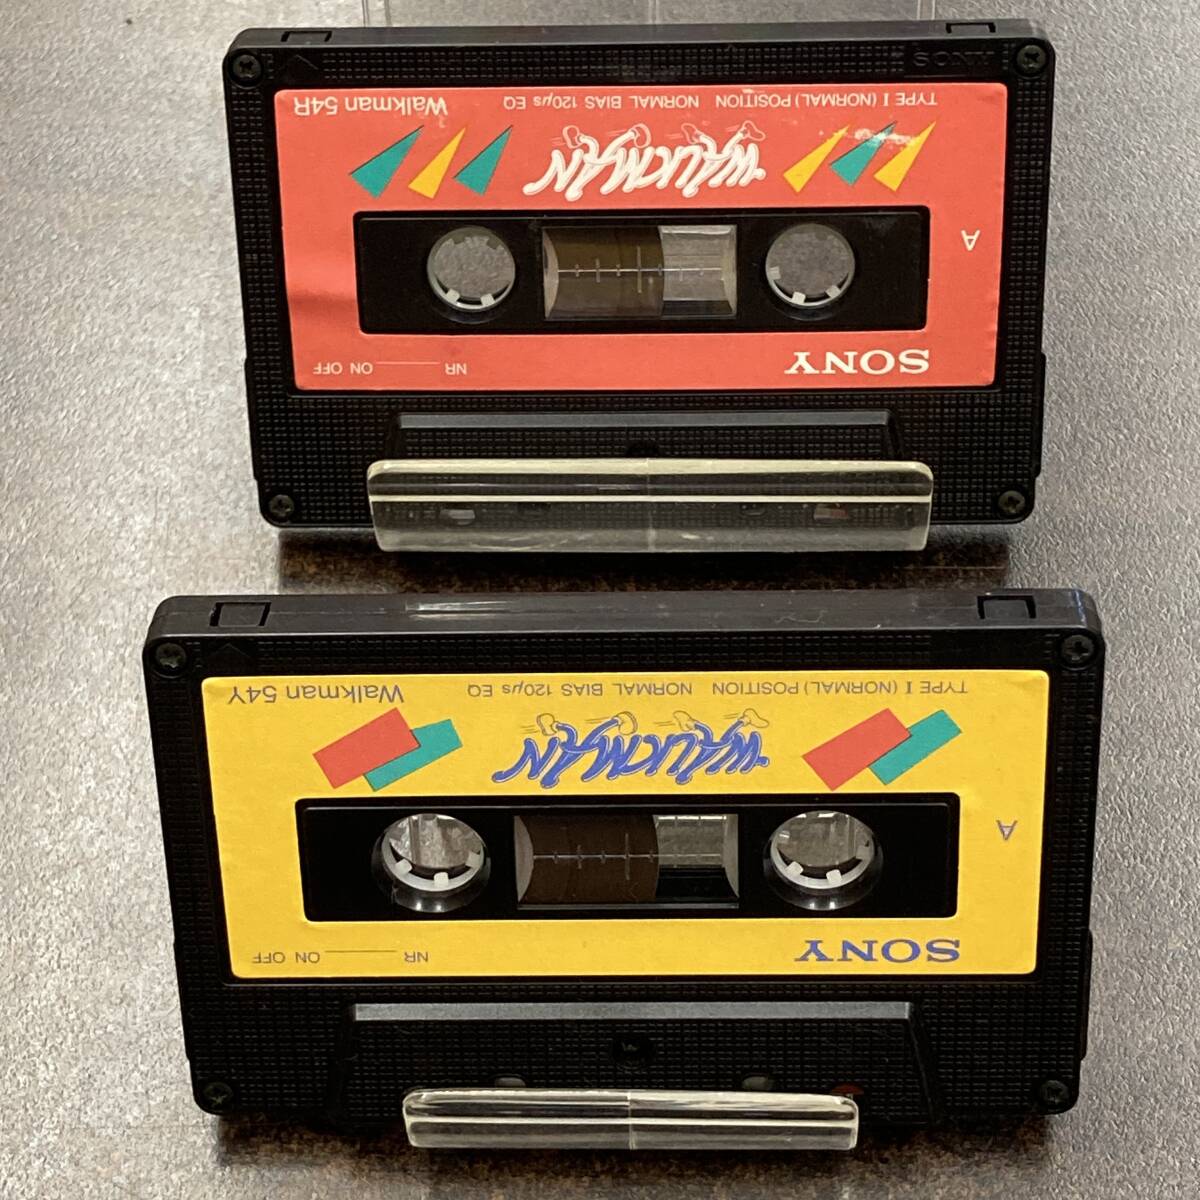 1804T ソニー Walkman 54分 ノーマル 2本 カセットテープ/Two SONY Walkman 54 Type I Normal Position Audio Cassette_画像1